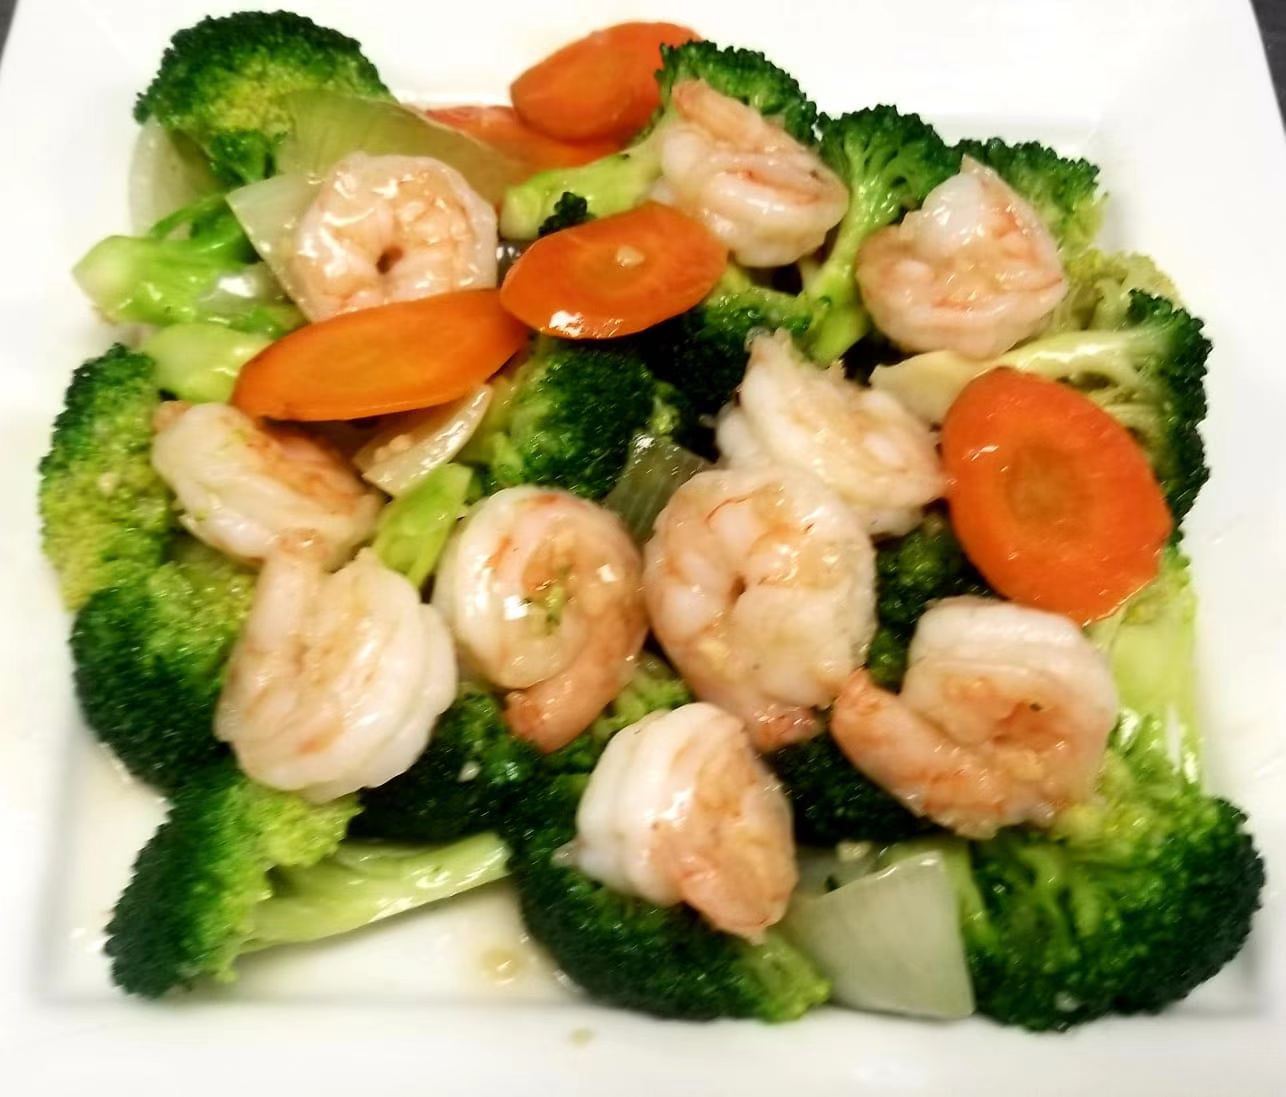 166. Shrimp with Broccoli